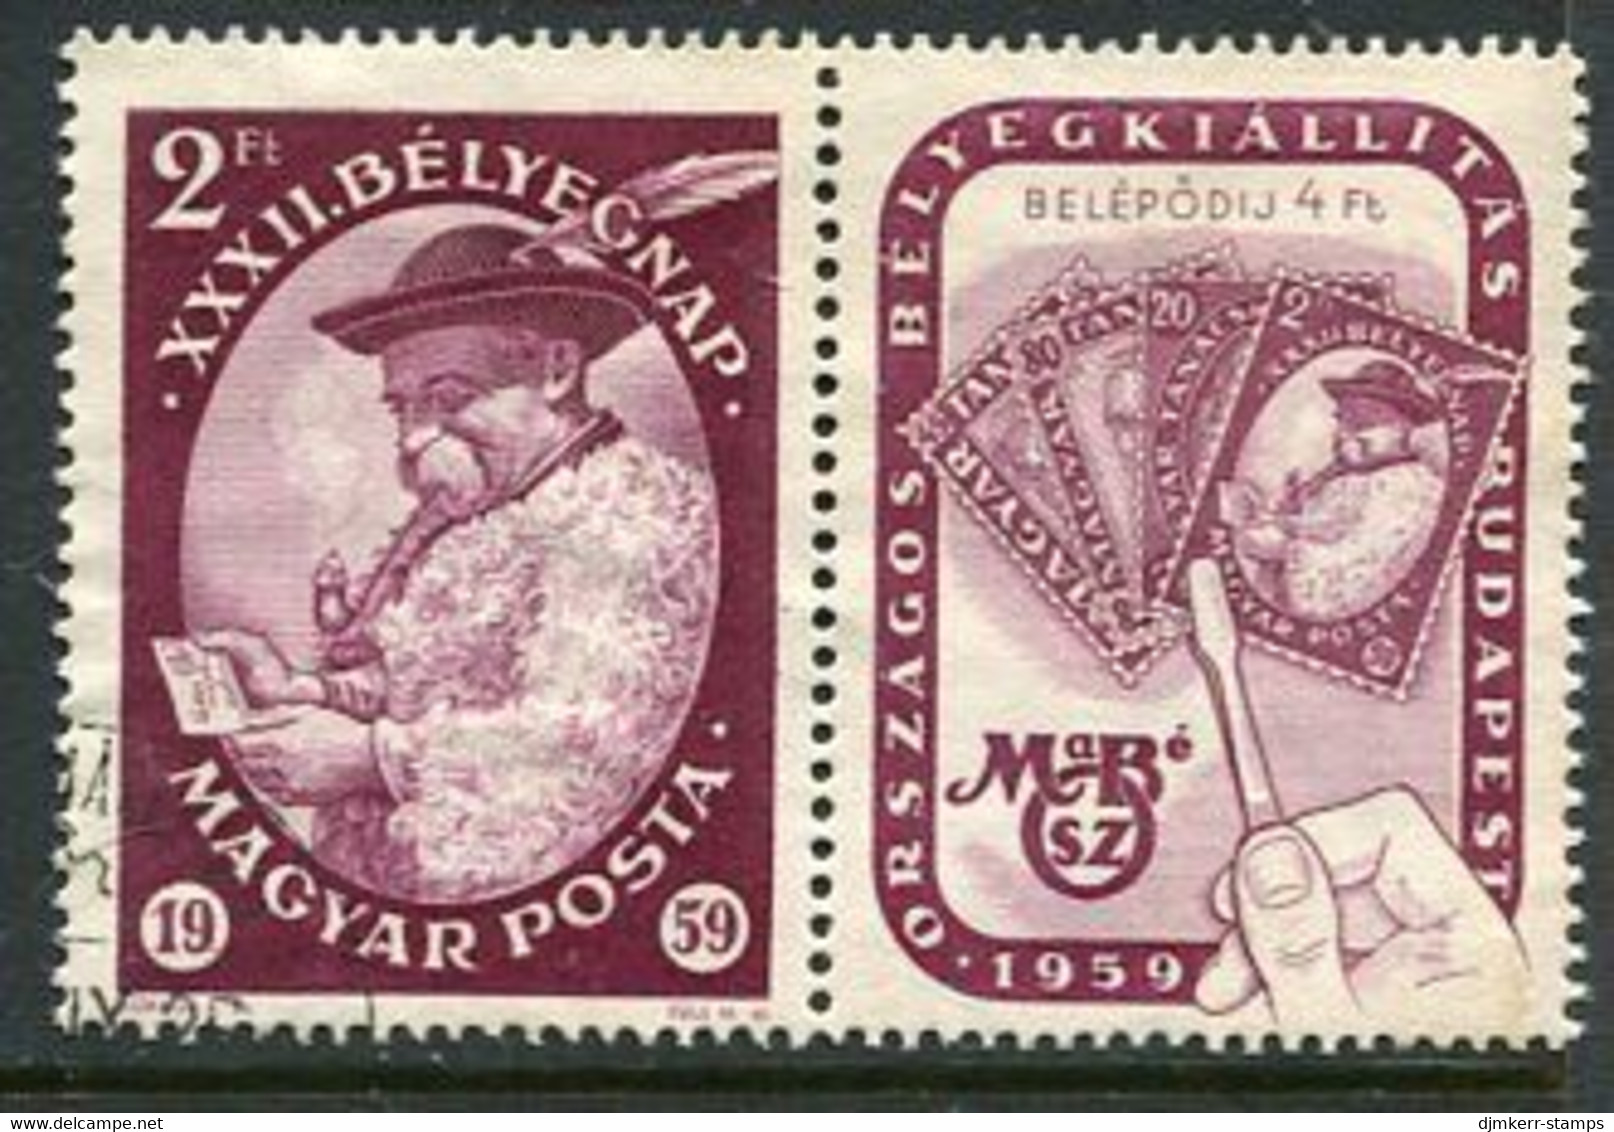 HUNGARY 1959 Stamp Day Used.  Michel; 1627 - Usati